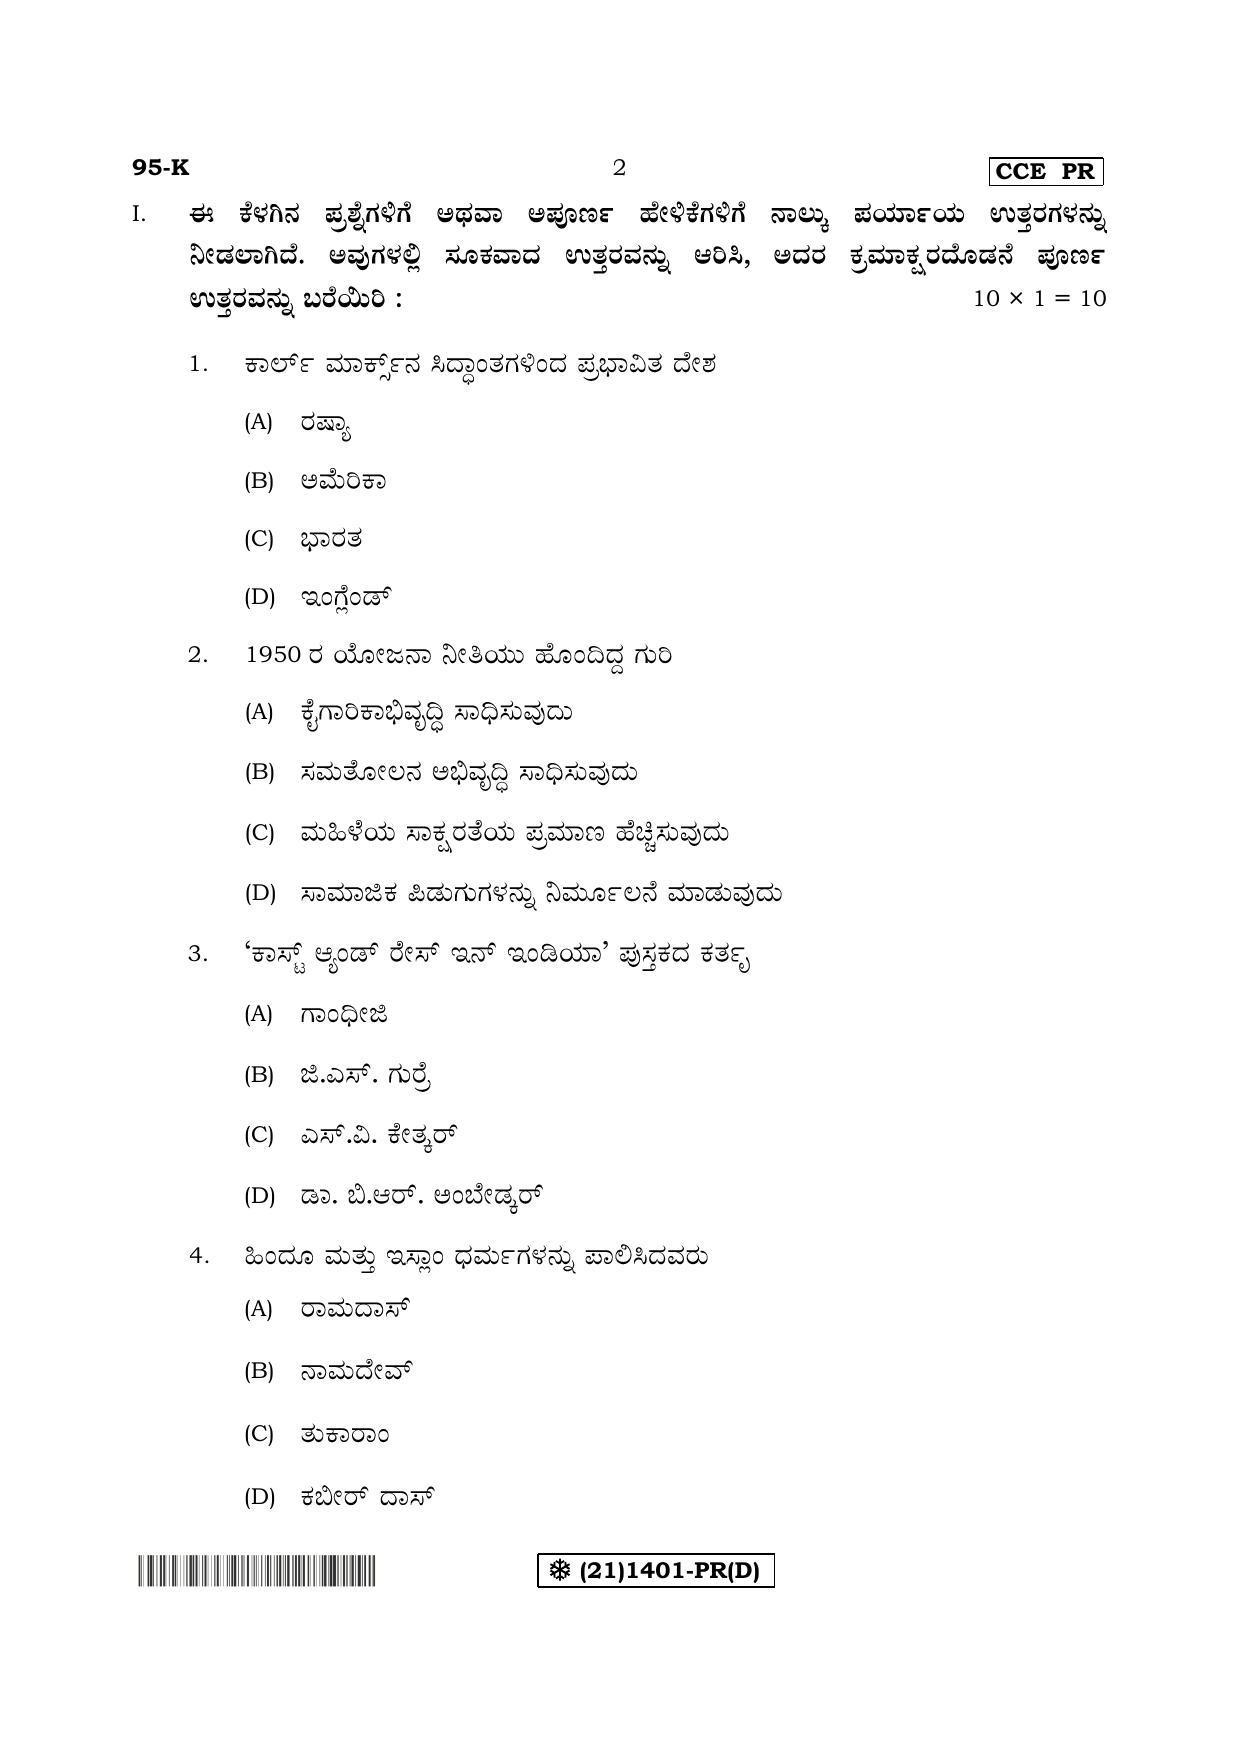 Karnataka SSLC SOCIOLOGY - KANNADA (95-K%20- PR - D) (Supplementary) June 2019 Question Paper - Page 2